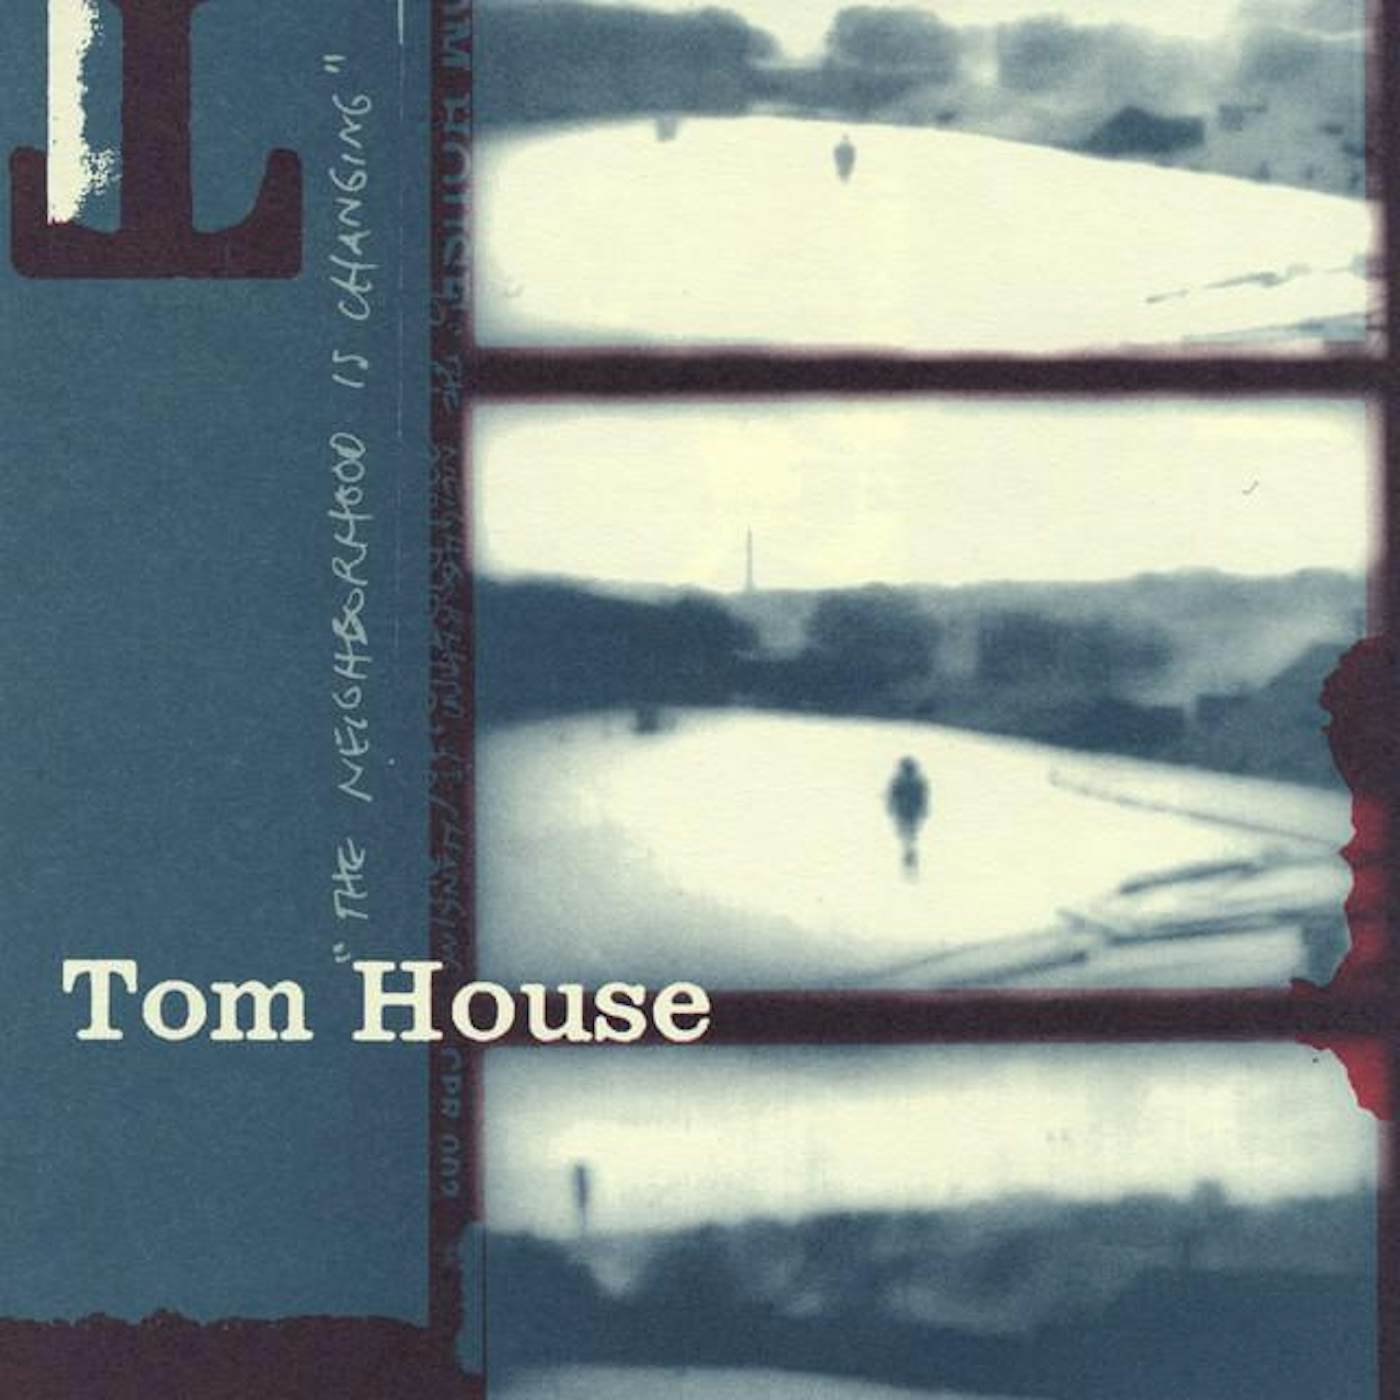 Tom House